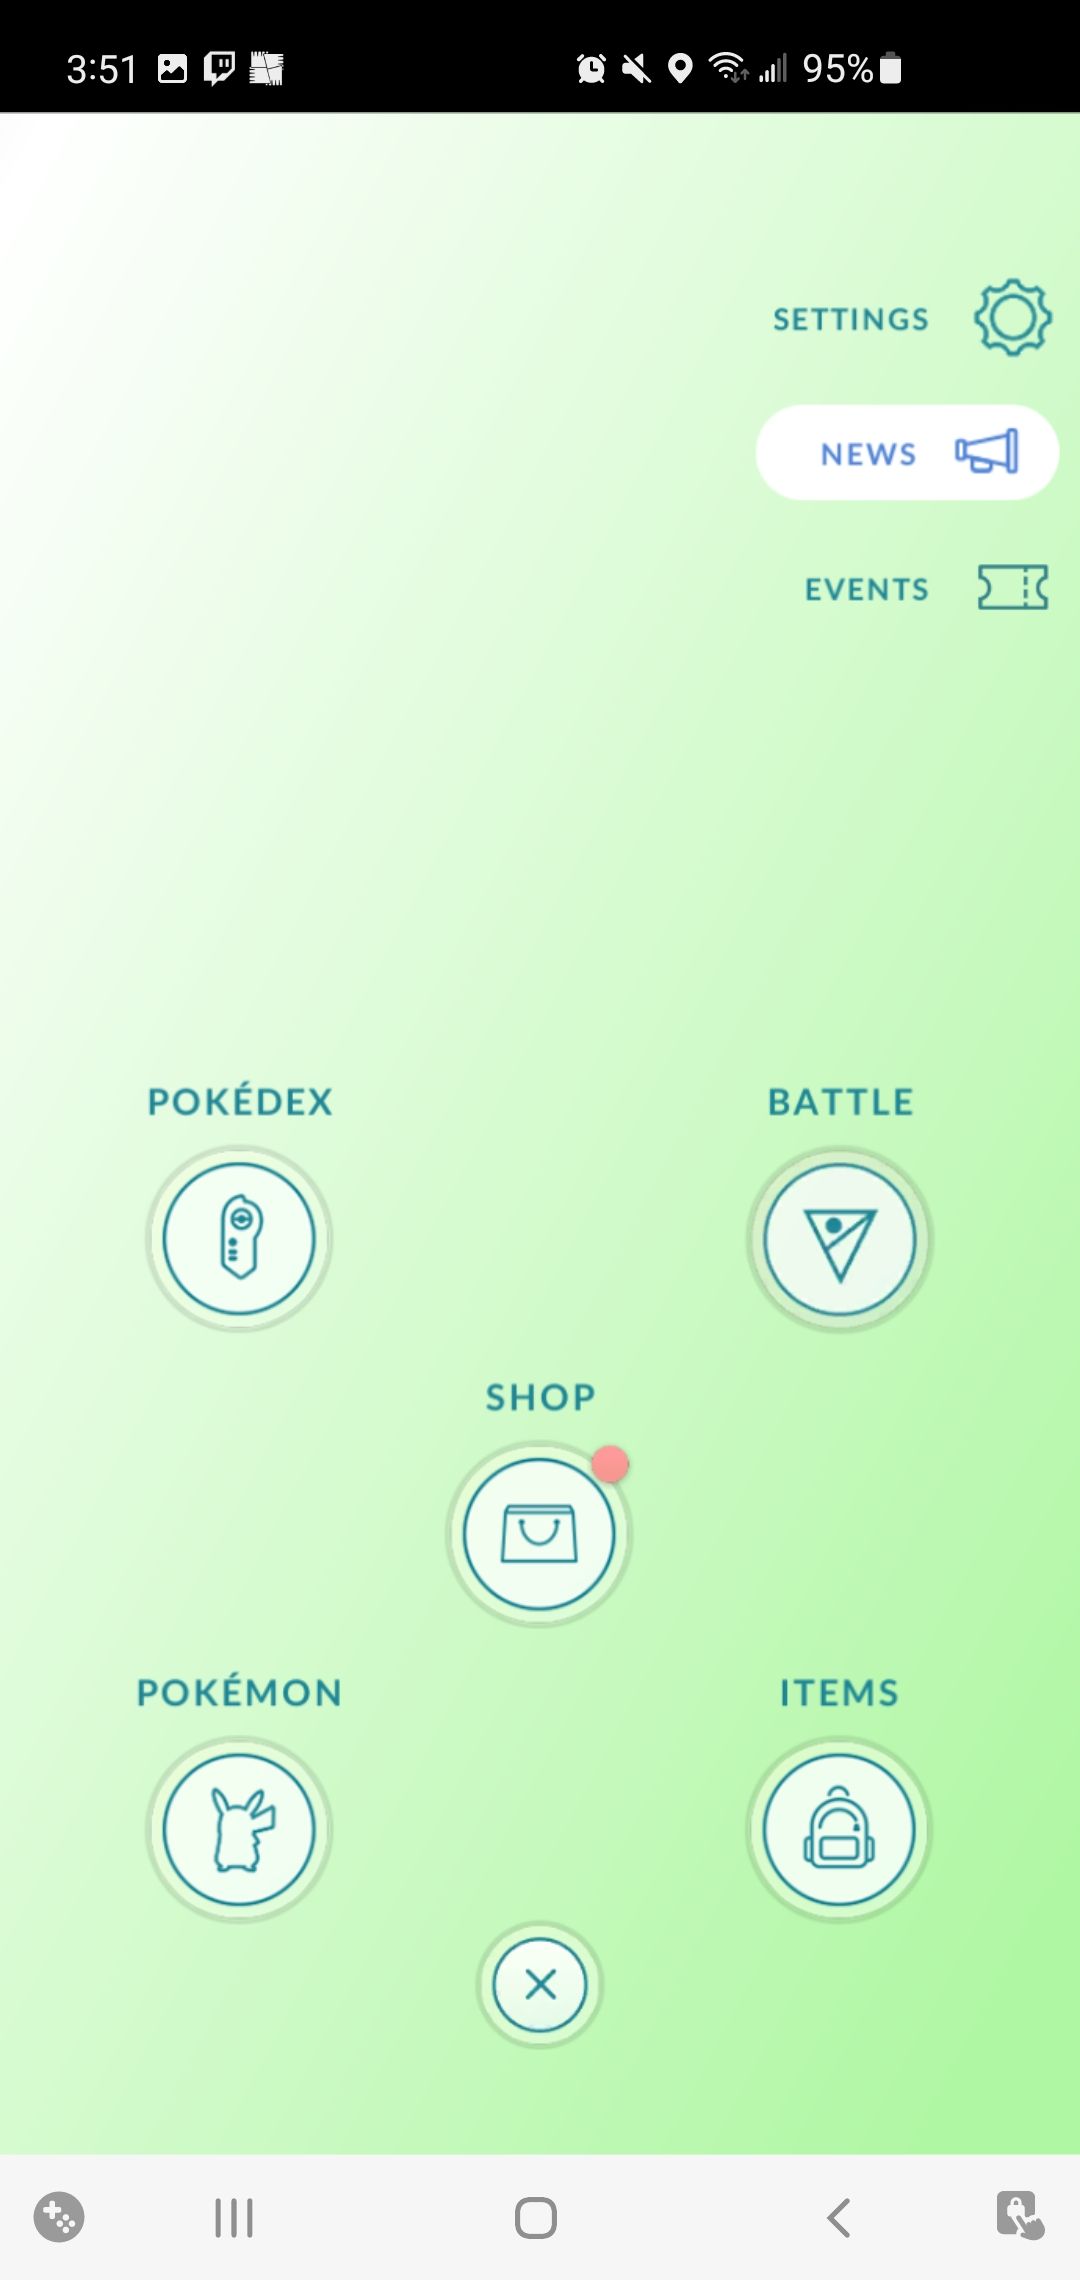 Tangkapan layar menu utama aplikasi Pokemon Go